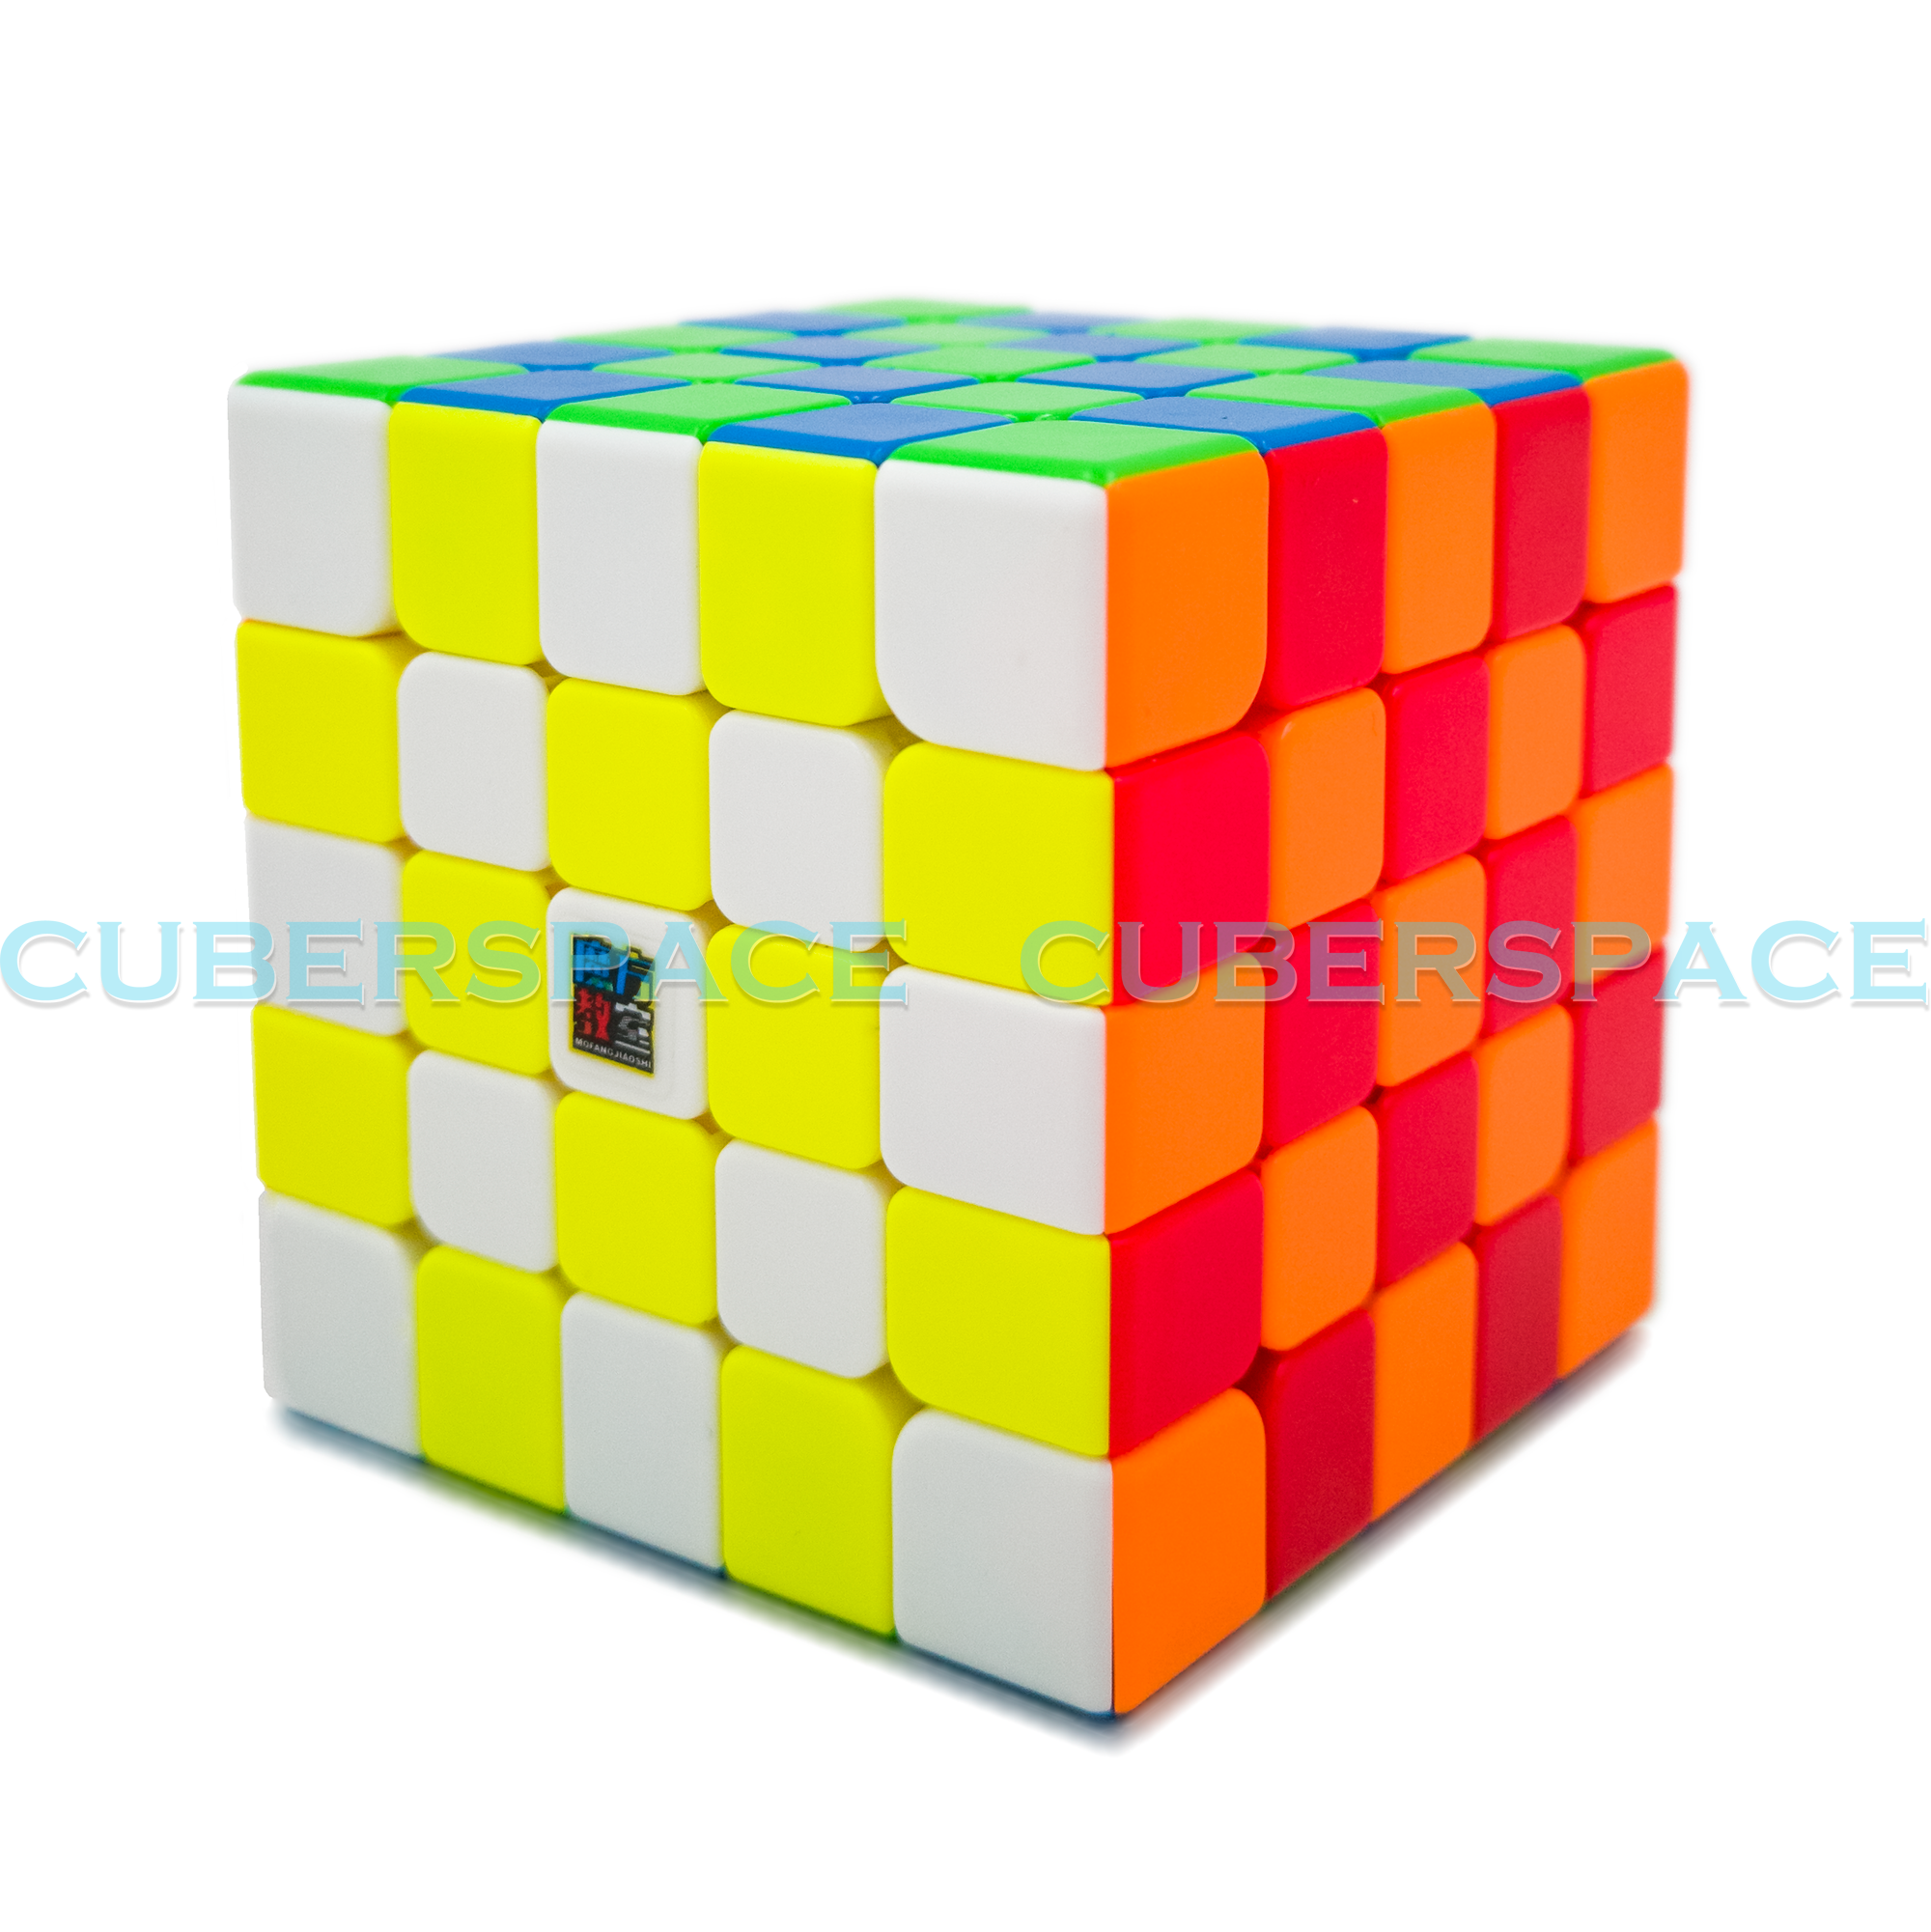 MFJS MeiLong 5x5 M - CuberSpace